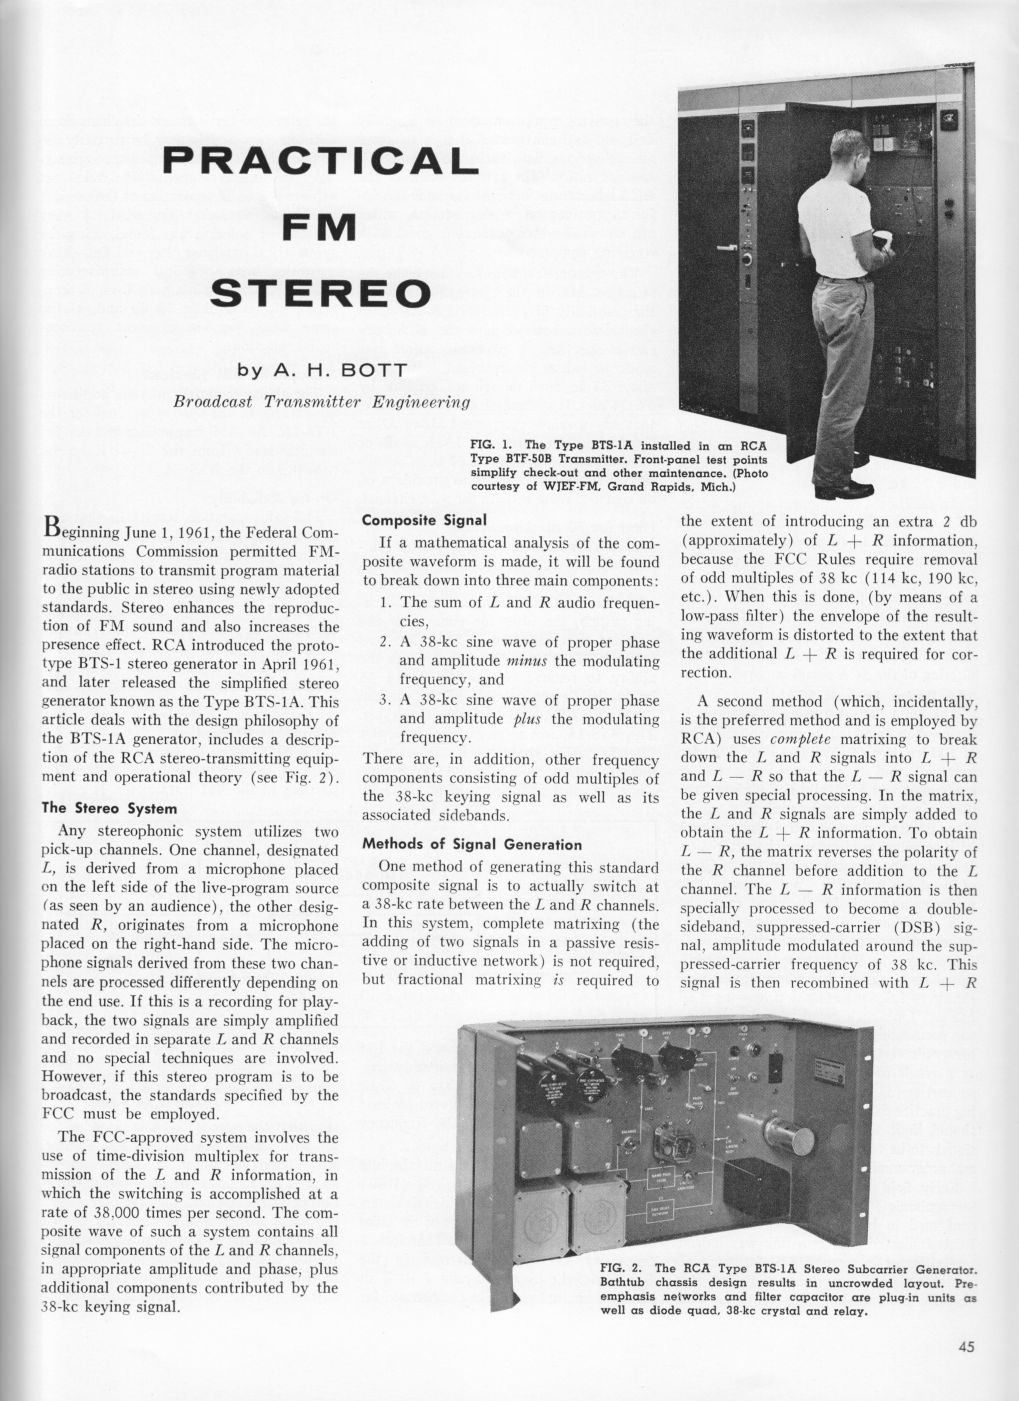 RCA TT-25AL Television Amplifier, page 1